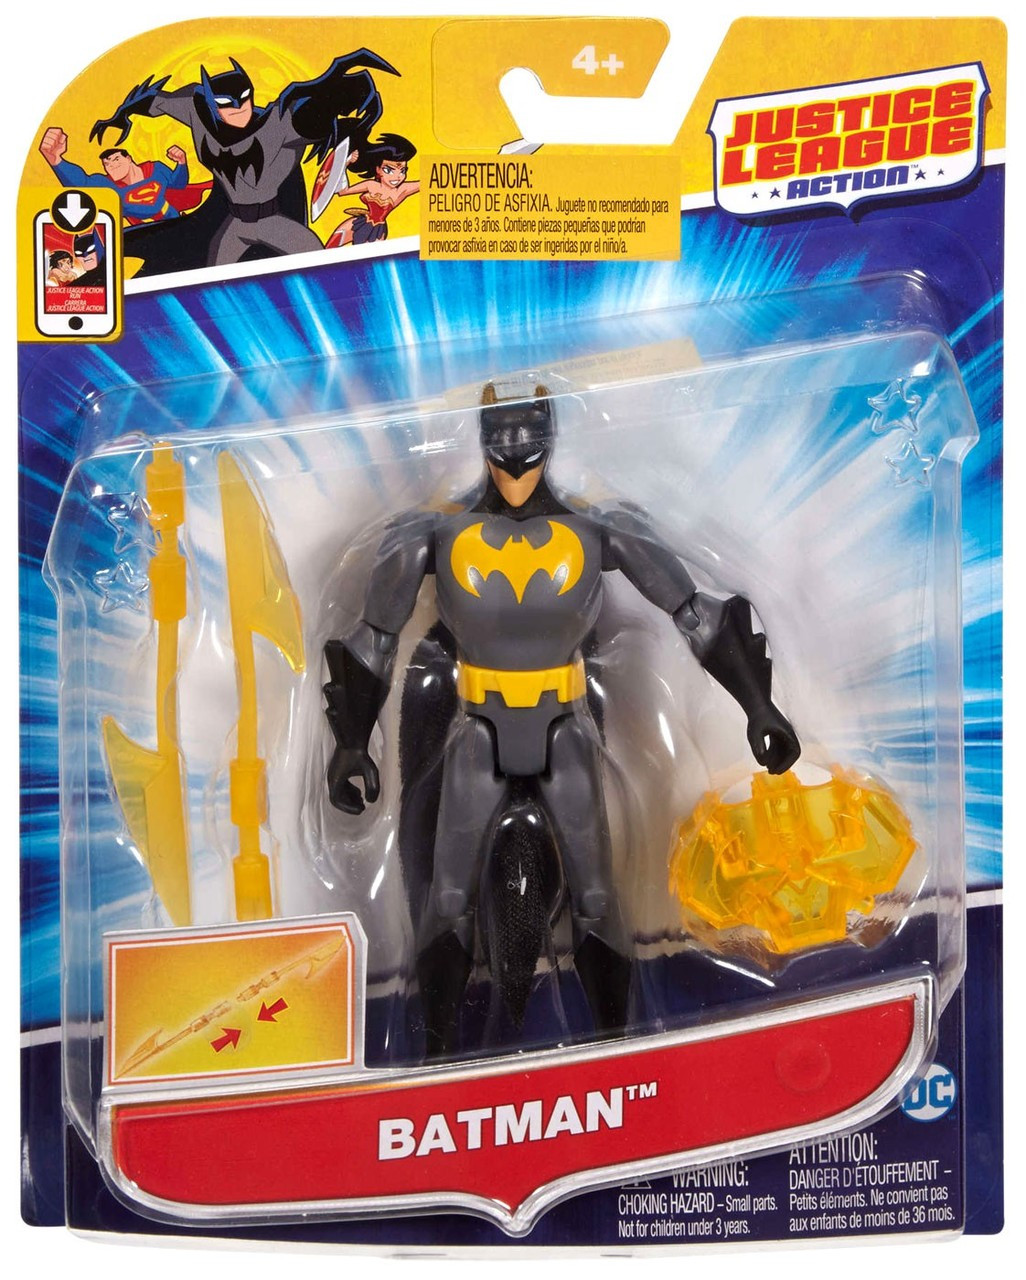 small batman action figures